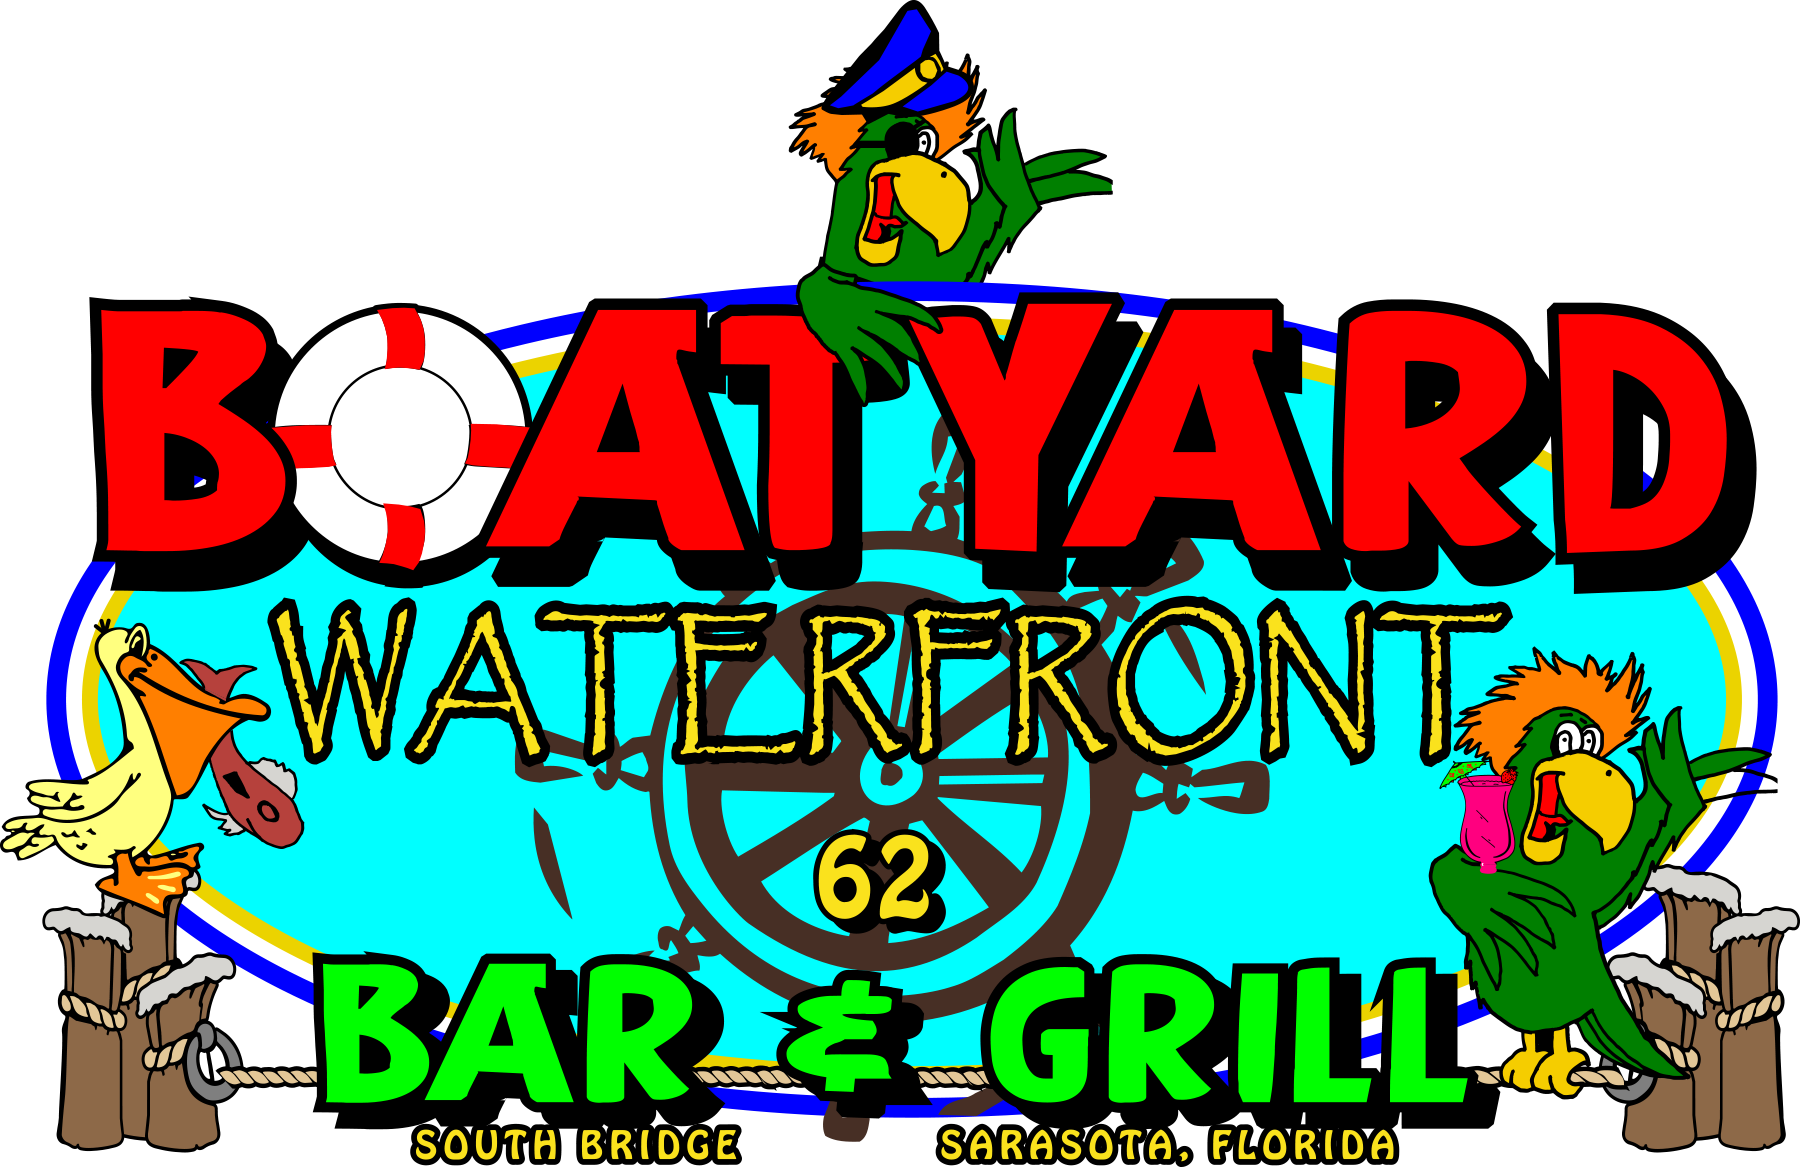 Boatyard Waterfront Grill